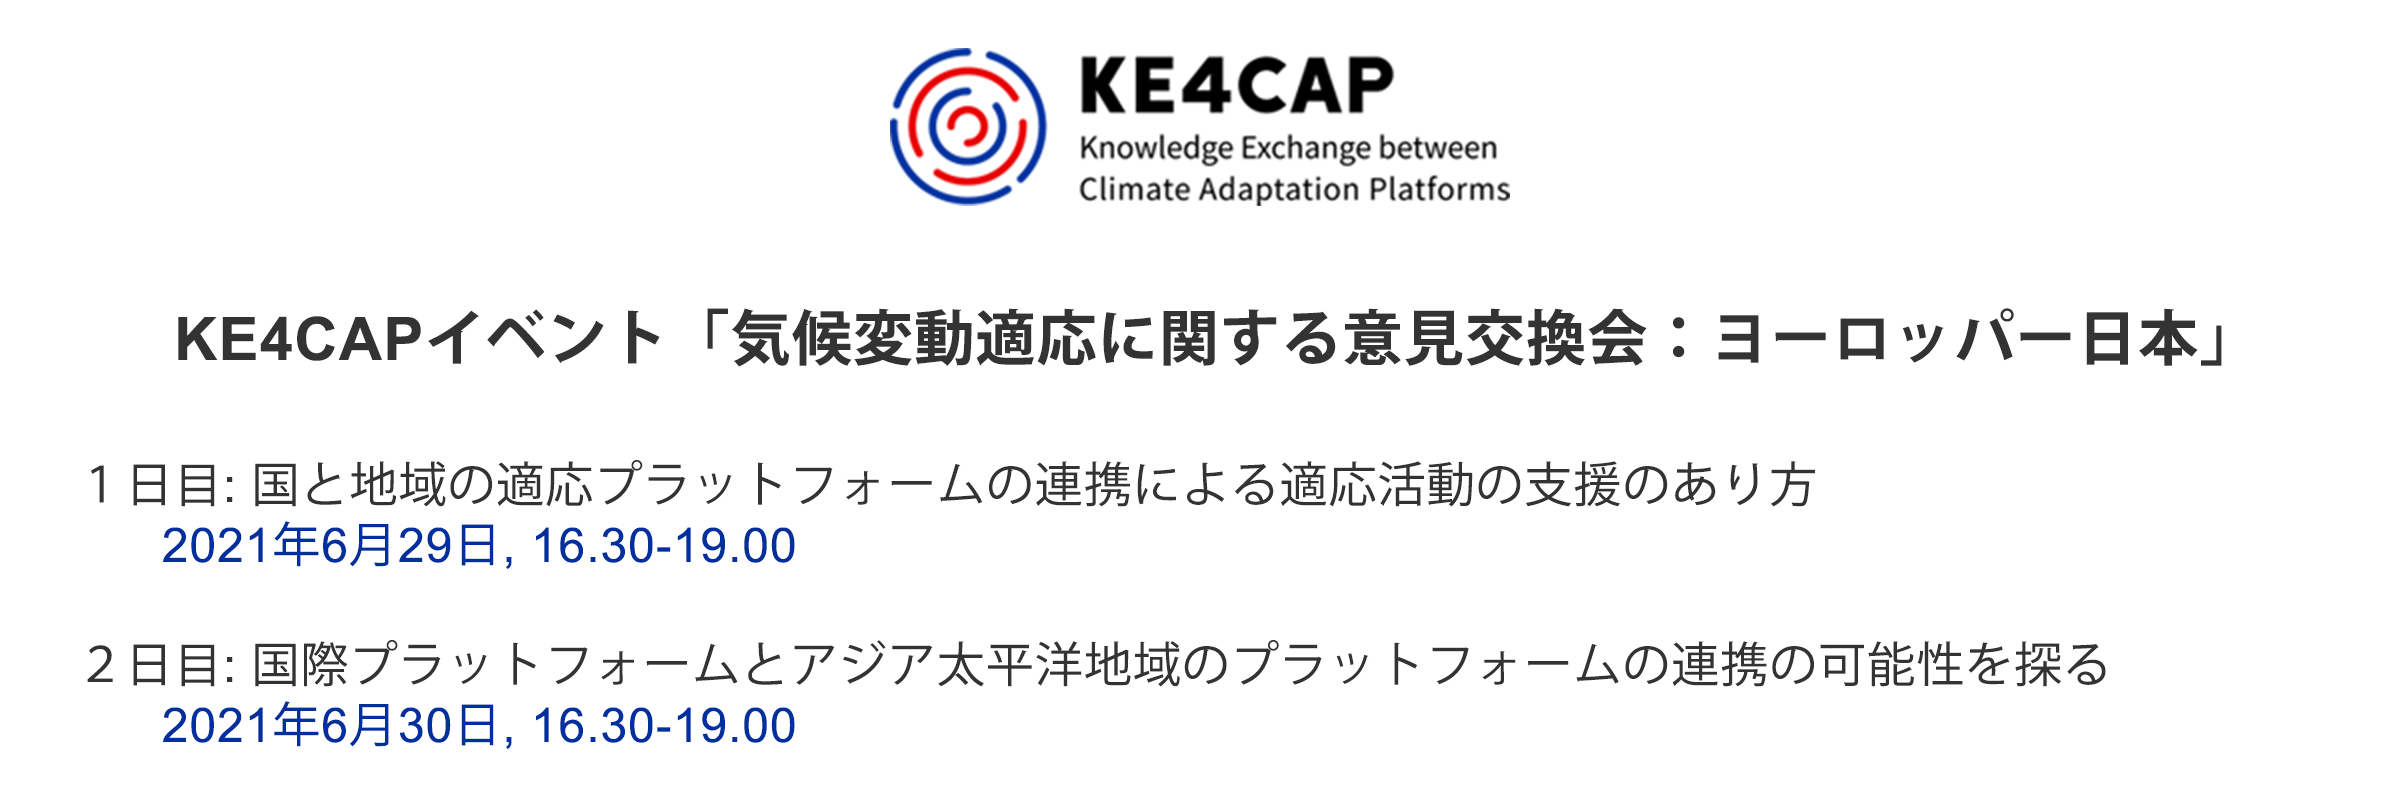 KE4CAP EU-Japan BKE Event